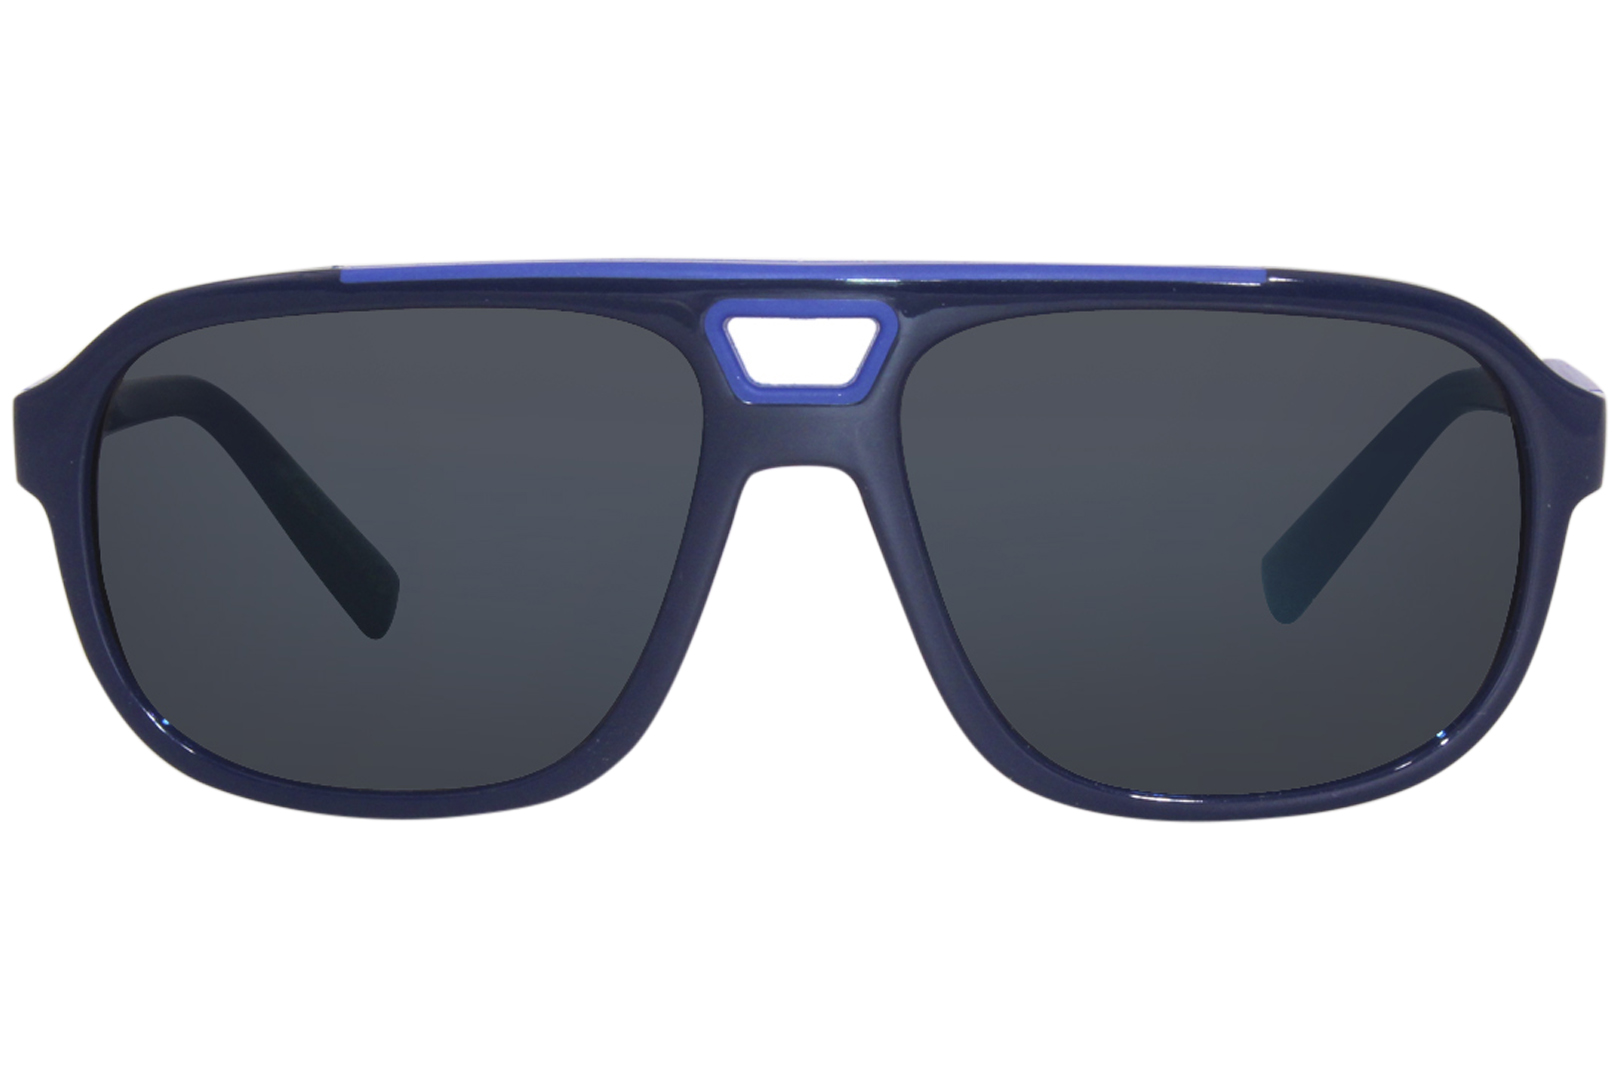 Dolce & Gabbana DG6179 Sunglasses Men's Pilot Shape | EyeSpecs.com